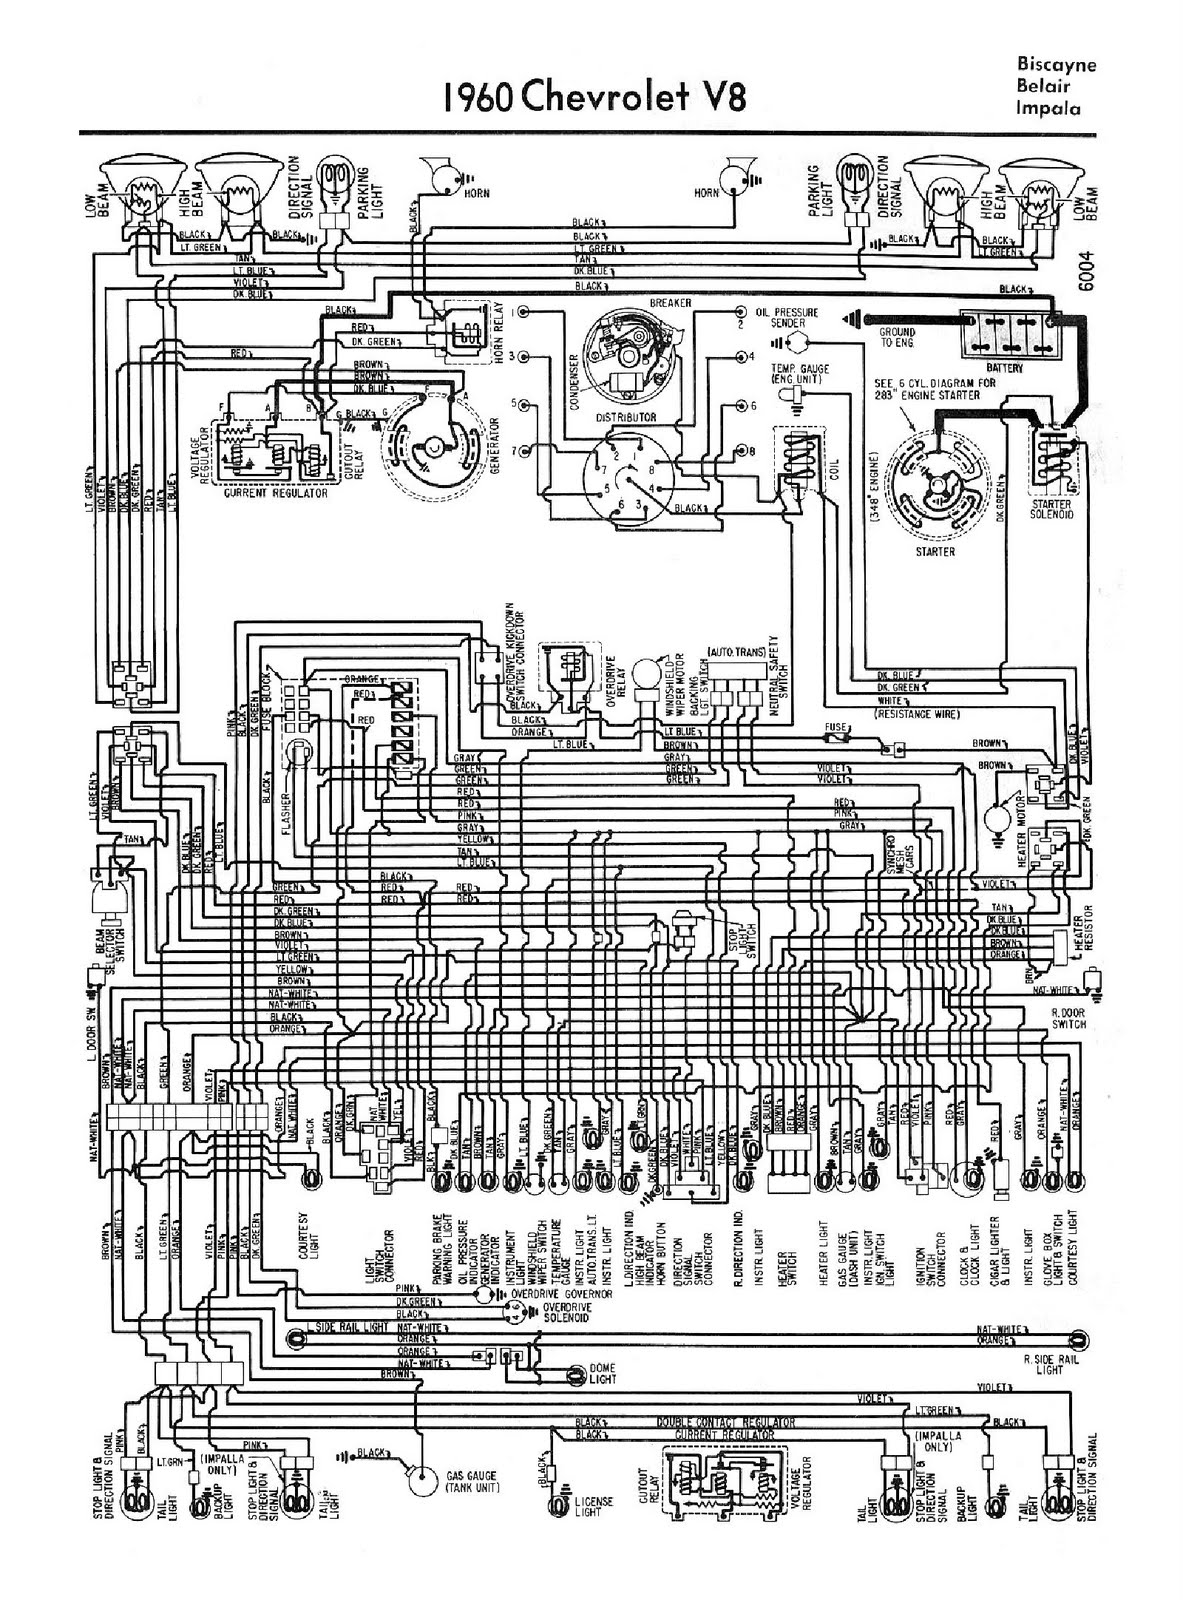 Free Auto Wiring Diagram  1960 Chevrolet V8 Biscayne